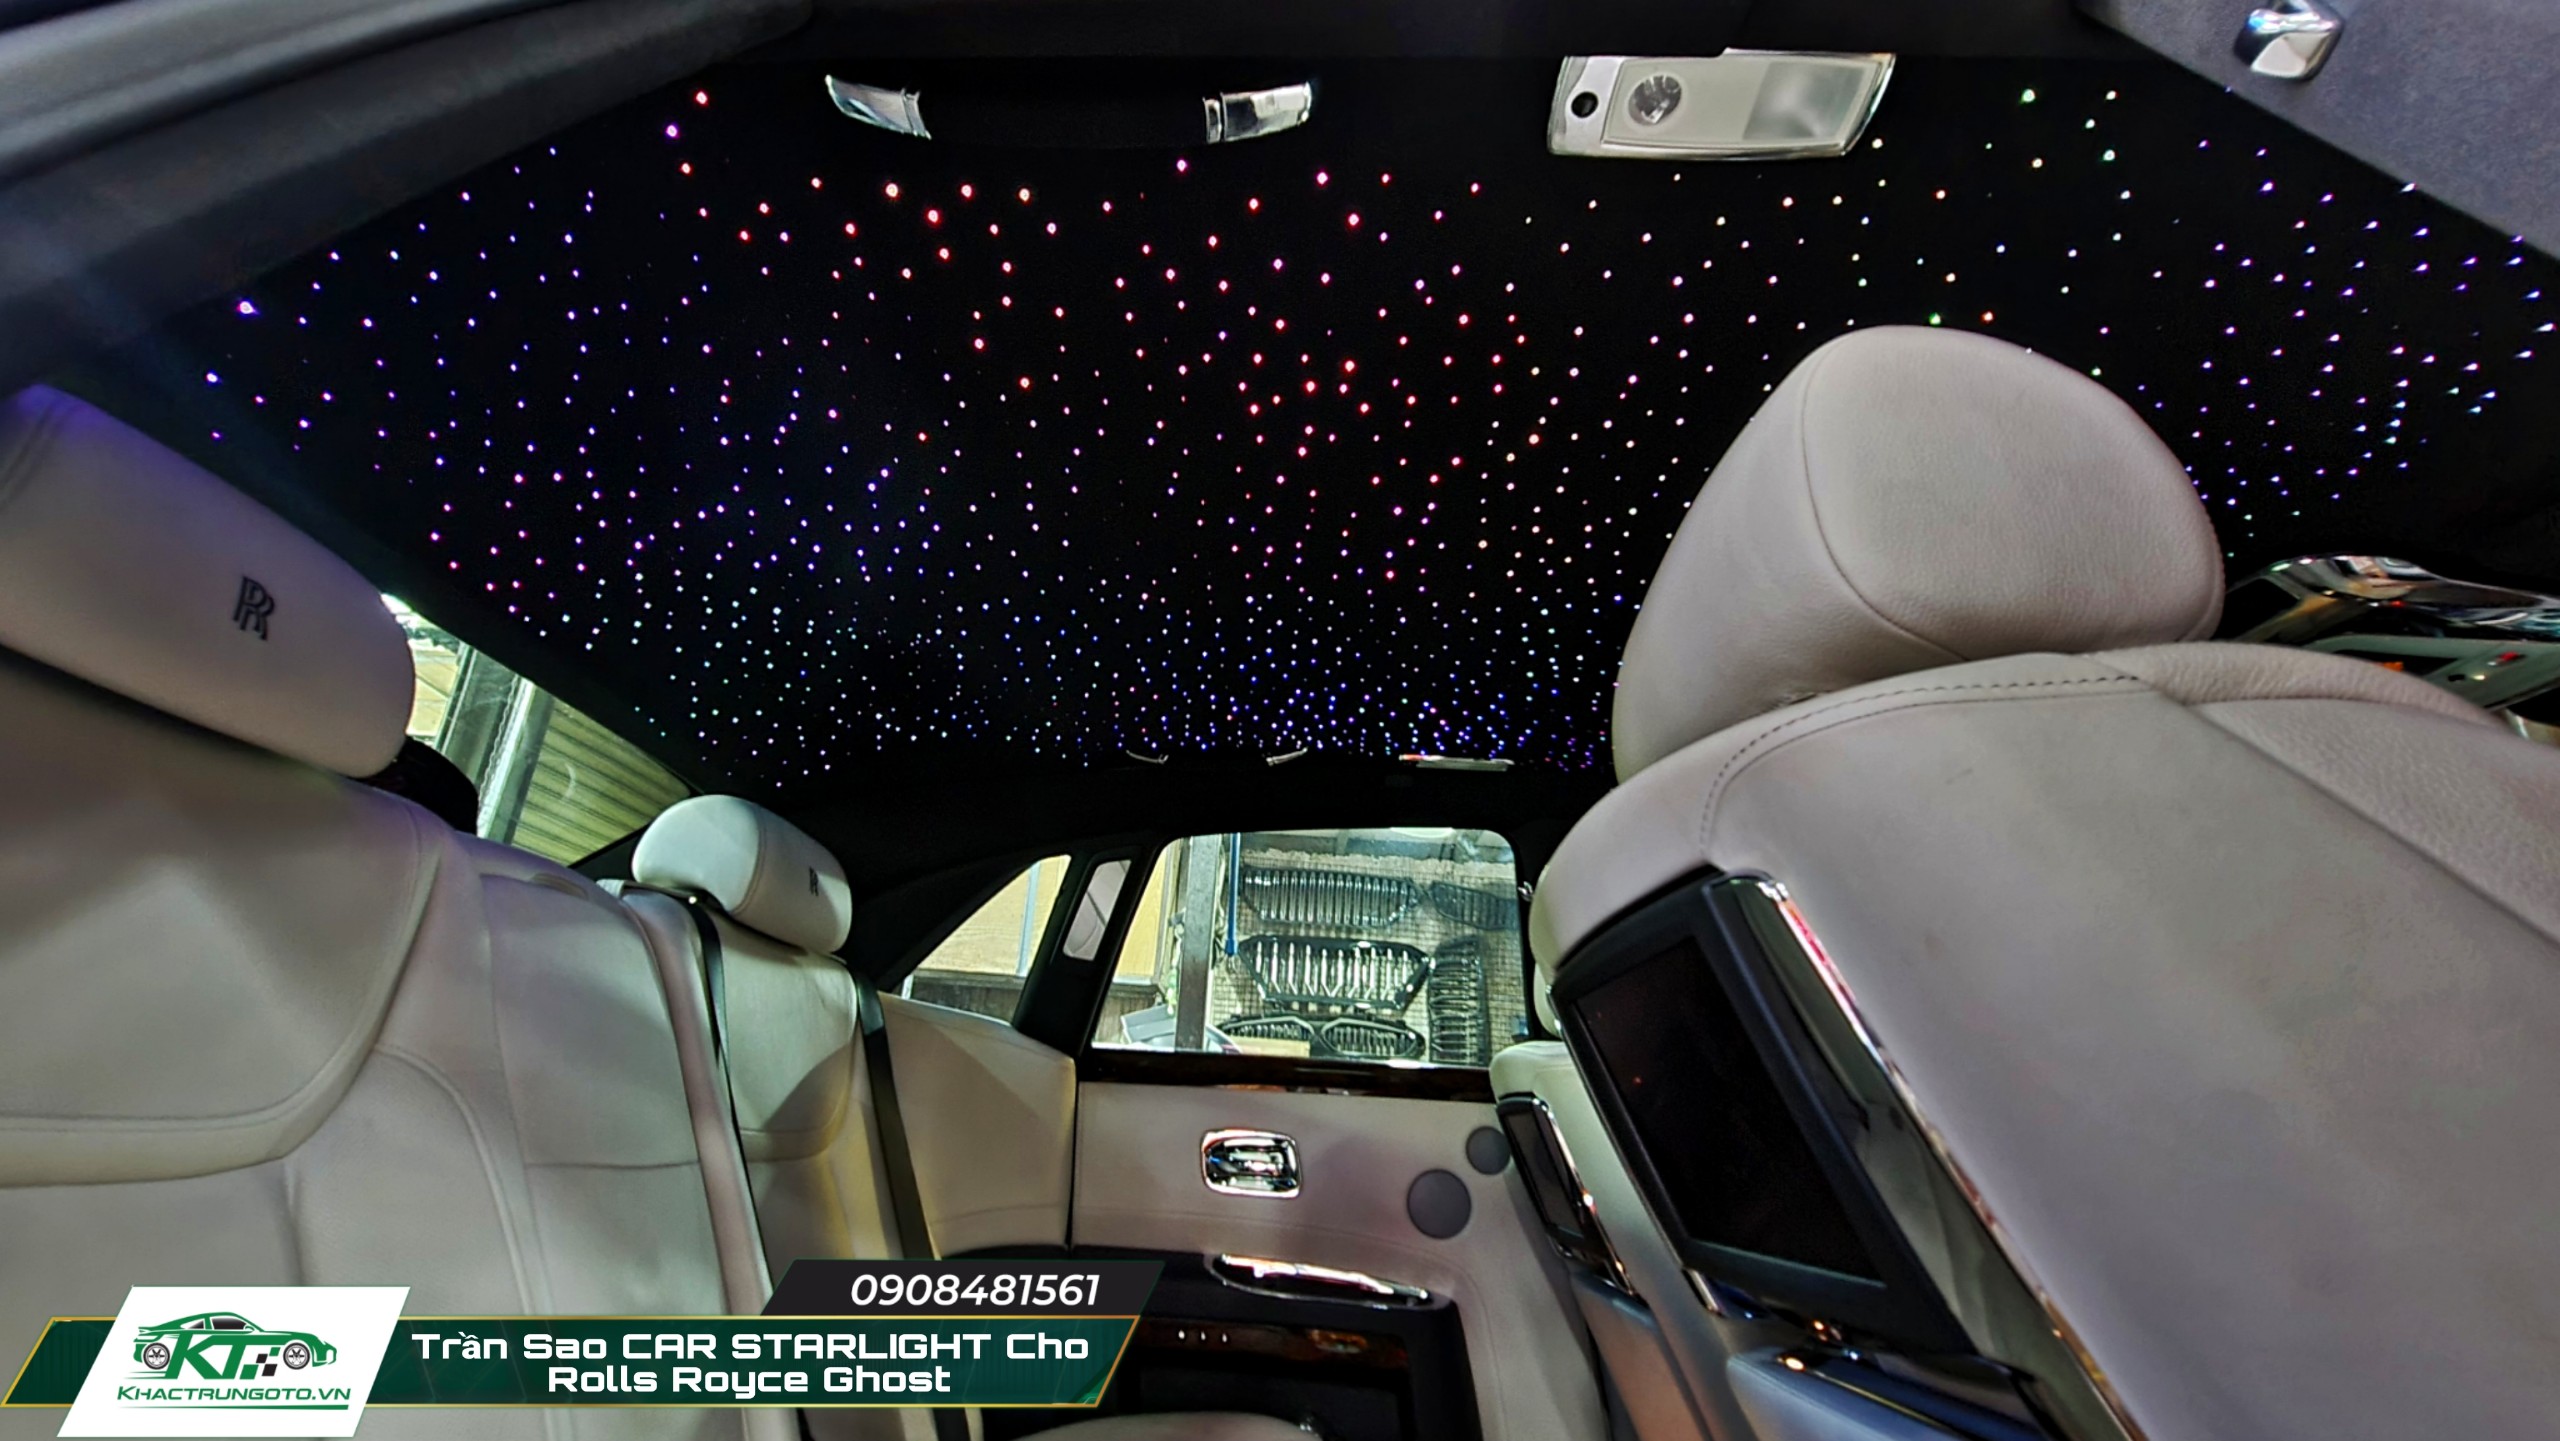 Used RollsRoyce Wraith Star Light Roof 2014 for sale in Dubai  371073